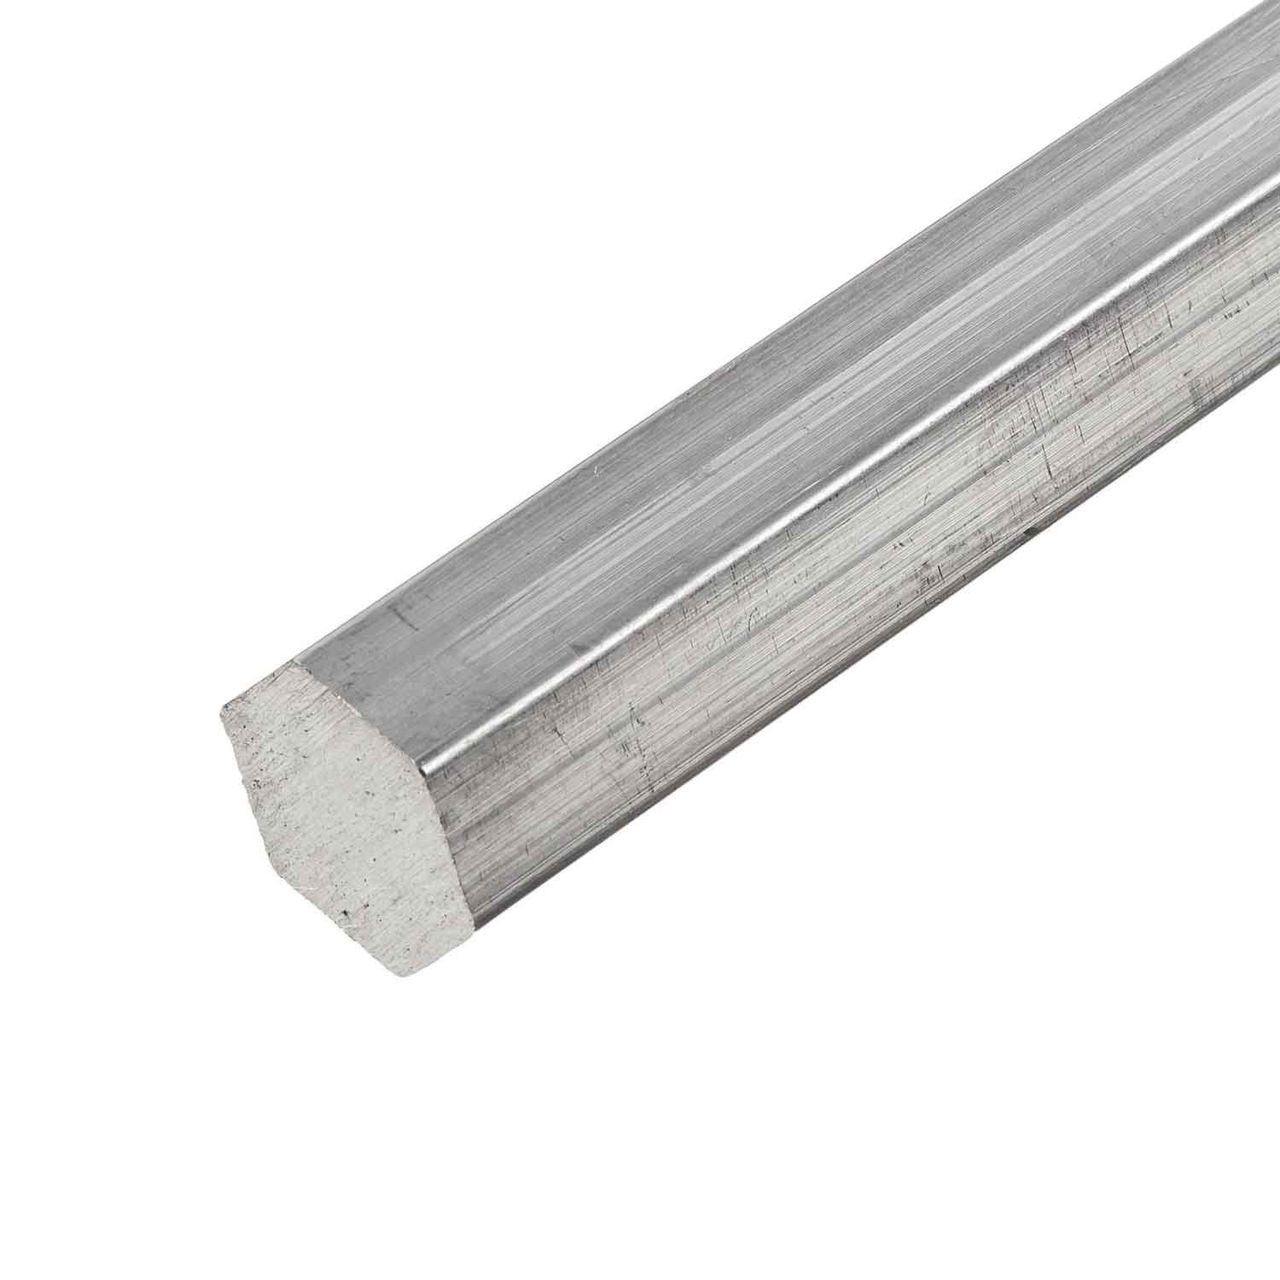 Across Flat 14mm Length 350mm 6061 Aluminum Solid Hex Rod Bar